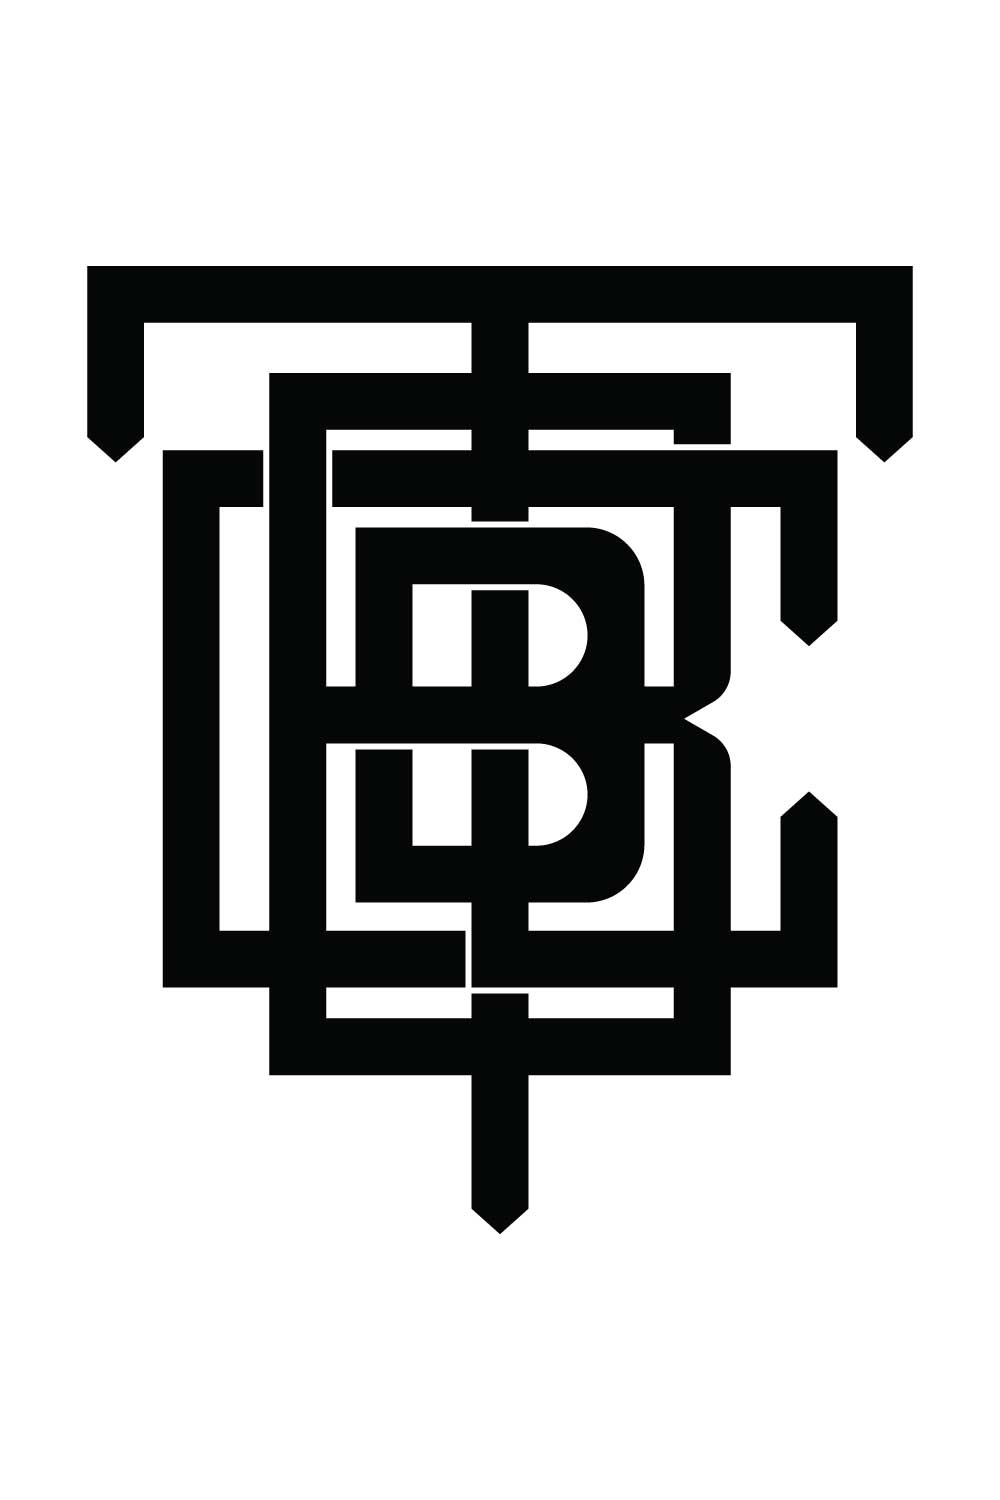 TBBC Monogram logo design pinterest preview image.